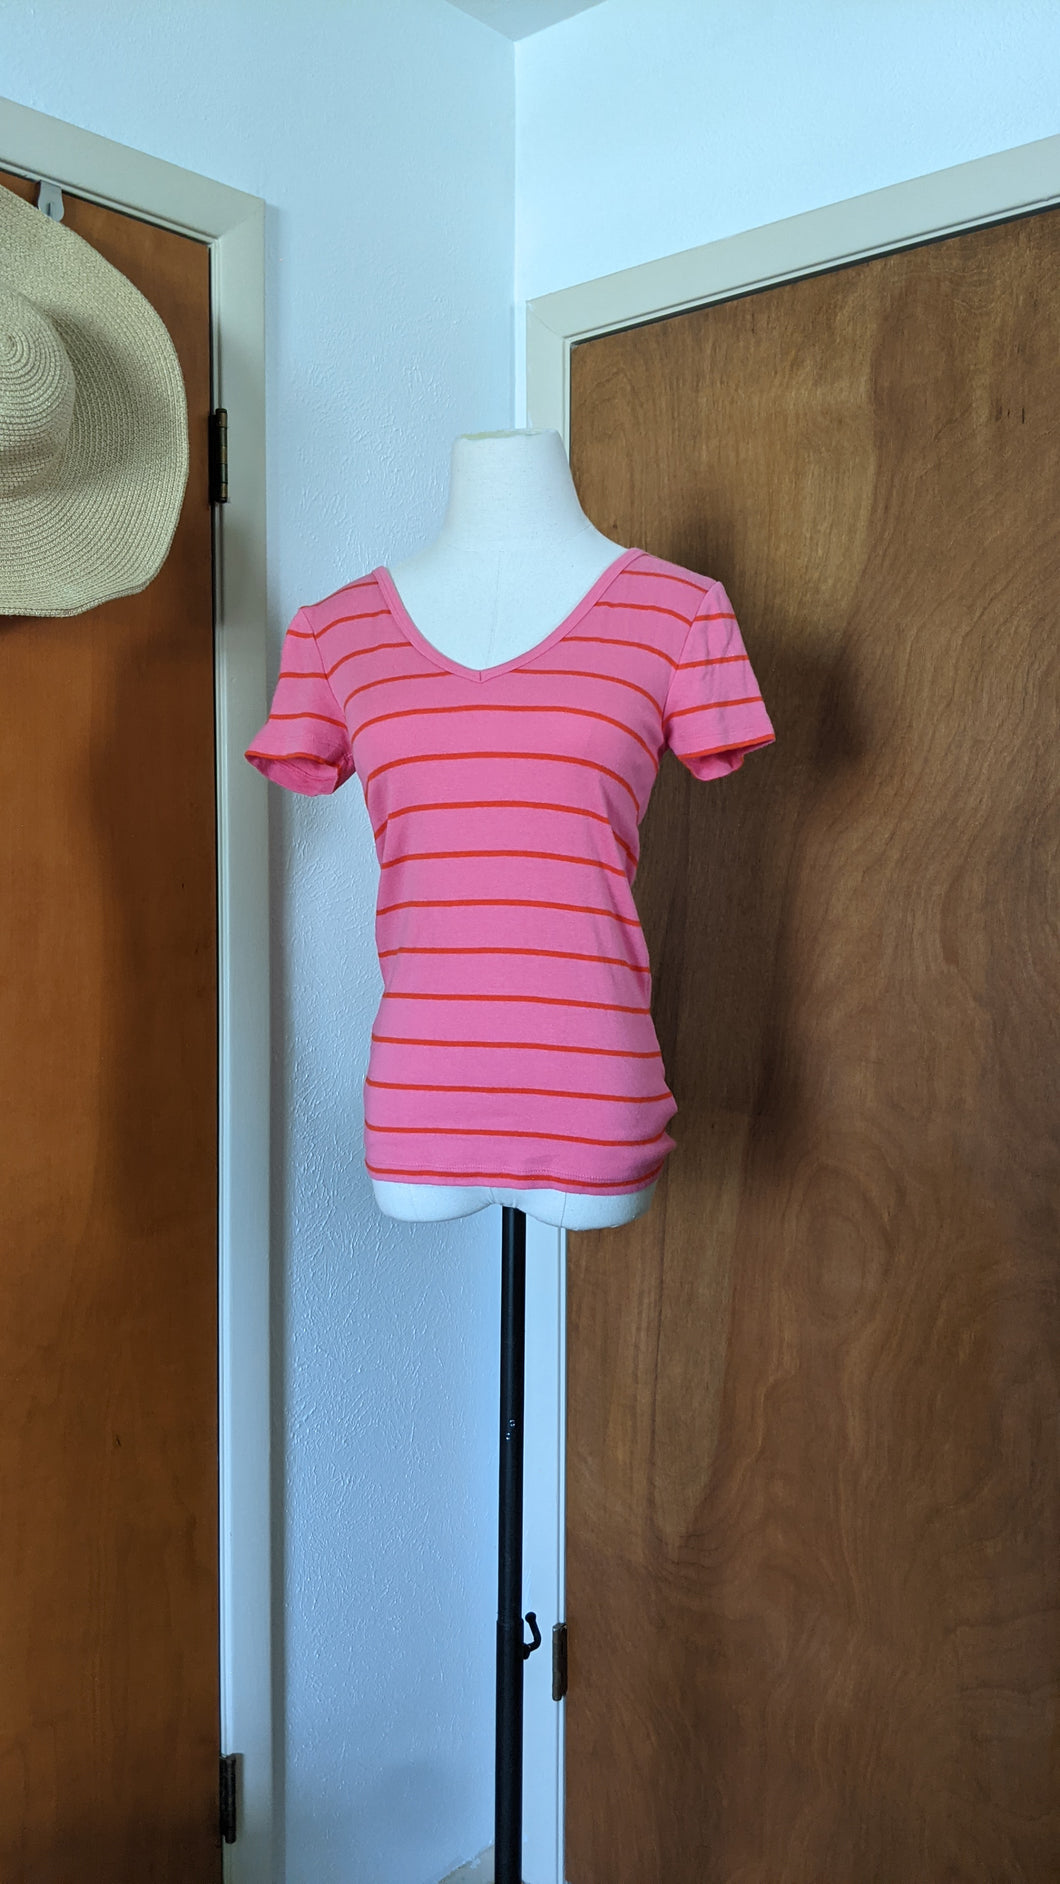 S - Gap pink and orange striped v-neck